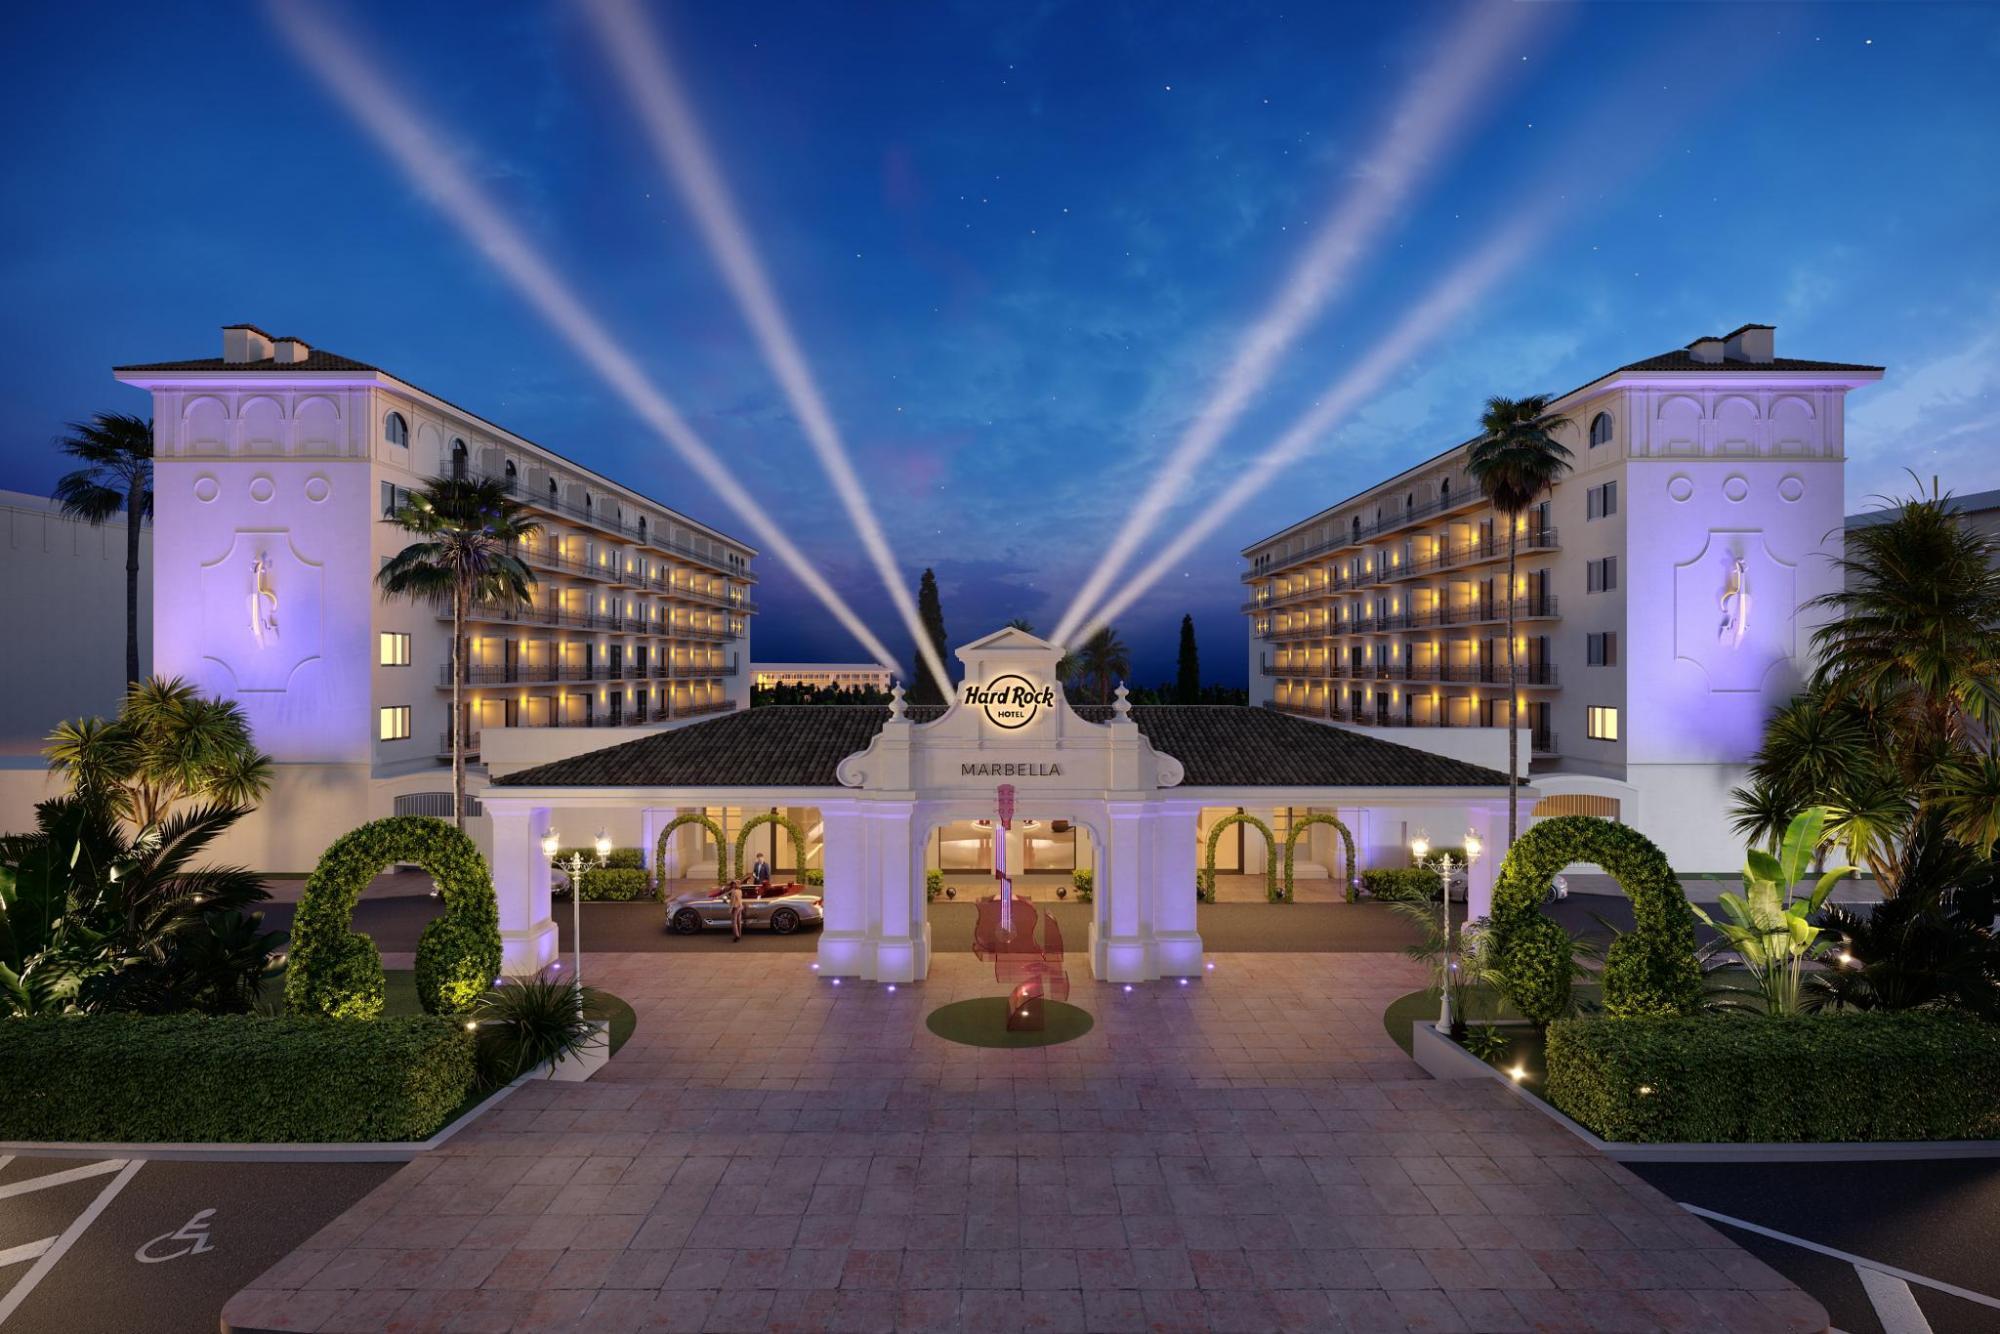 NEU! Palladium Hotel Group eröffnet Hard Rock Hotel Marbella